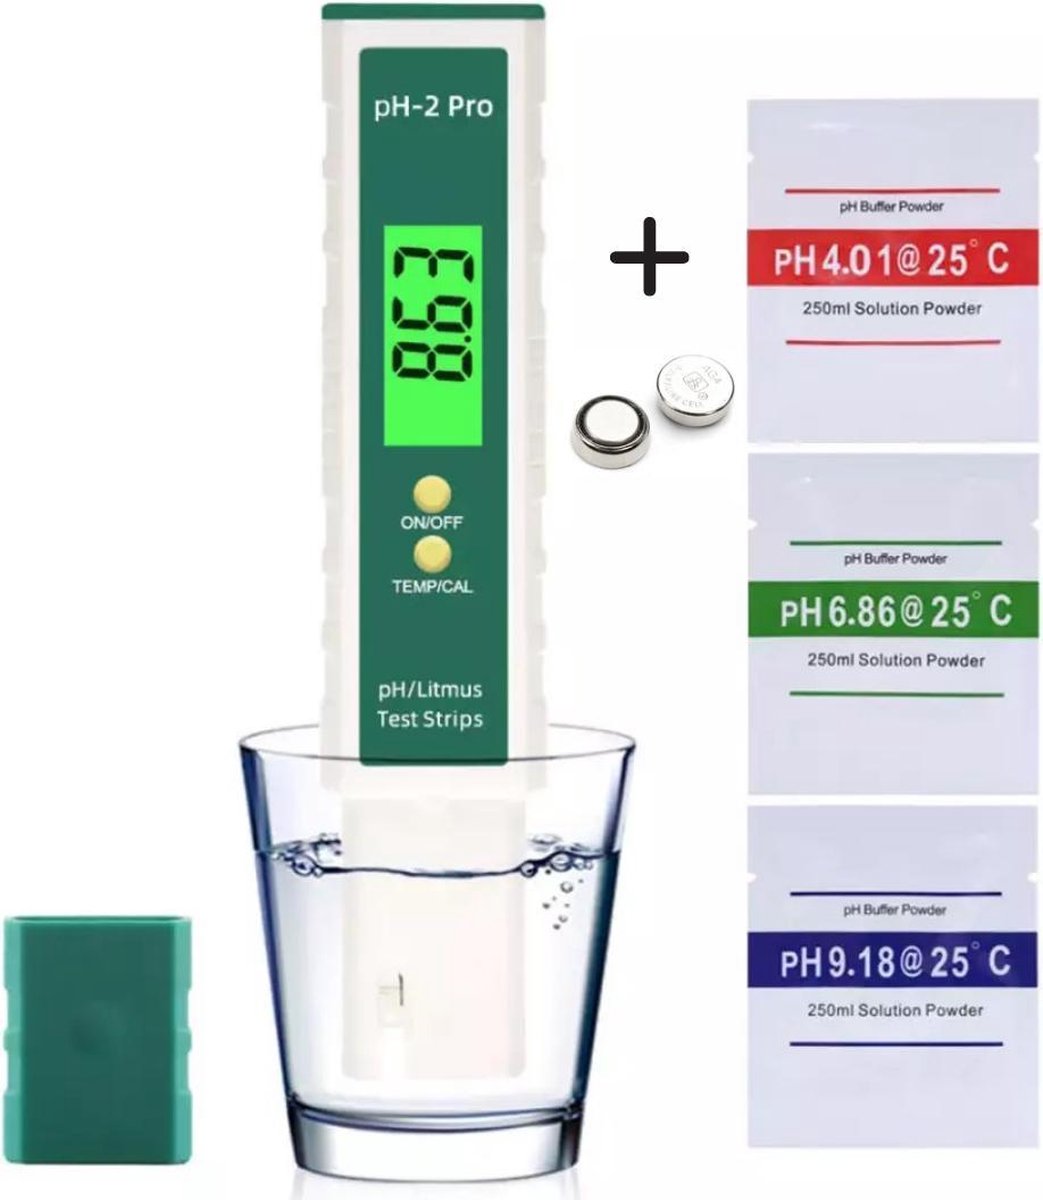 pH pro meter - Litmus test - Digitale pH meter - pH indicator - pH waarde meten - Lakmoesproef - Water kwaliteit testen - Thermometer water -Voor zwembad, aquarium, vijver, drinkwater en meer - Inclusief batterij + 3 kalibratiepoeders - Merkloos